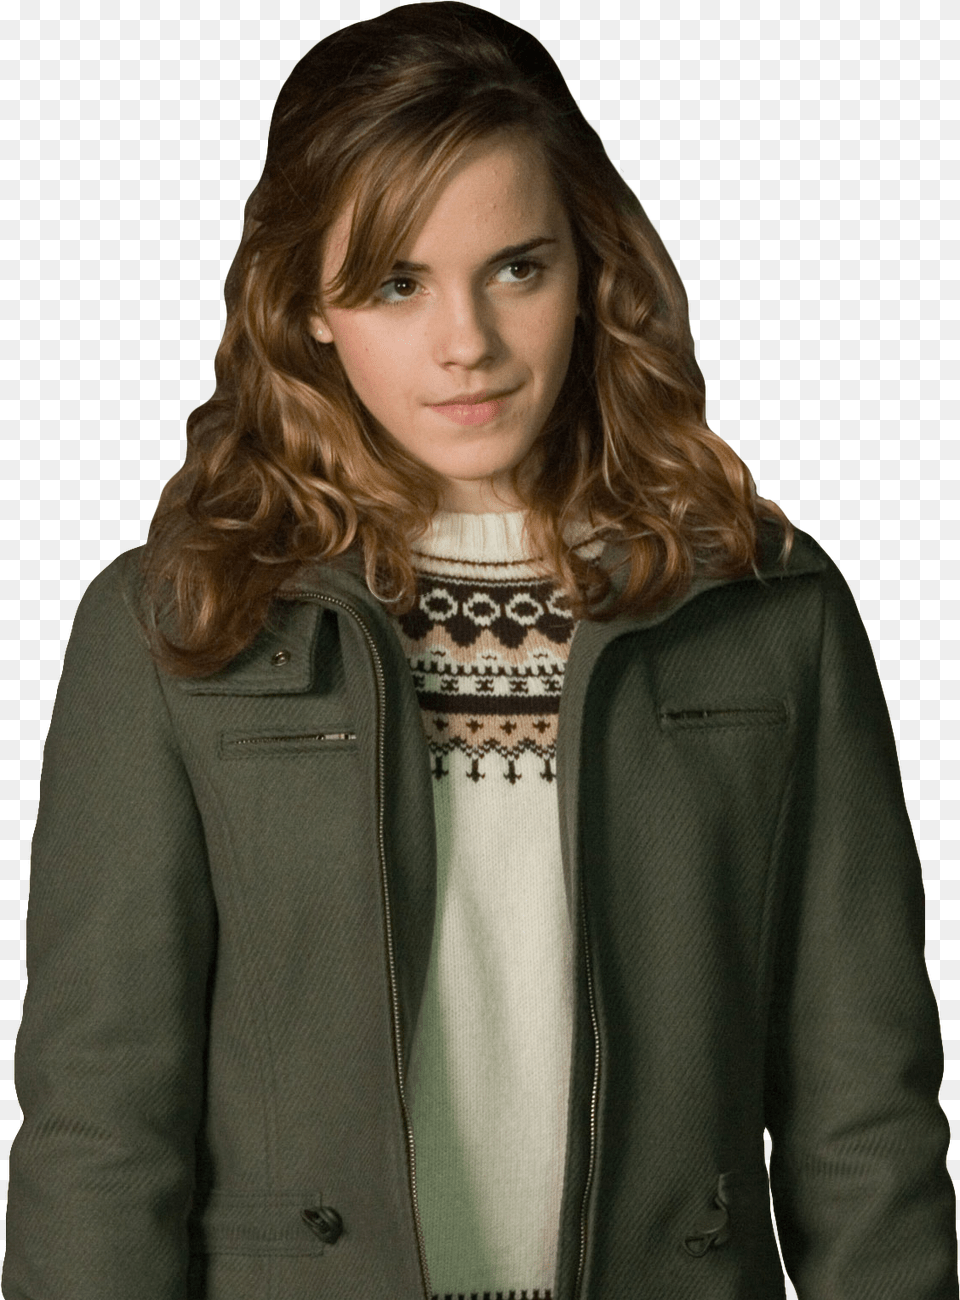 Download Free Fandom Transparents Beautiful Hermione Granger, Clothing, Coat, Jacket, Adult Png Image